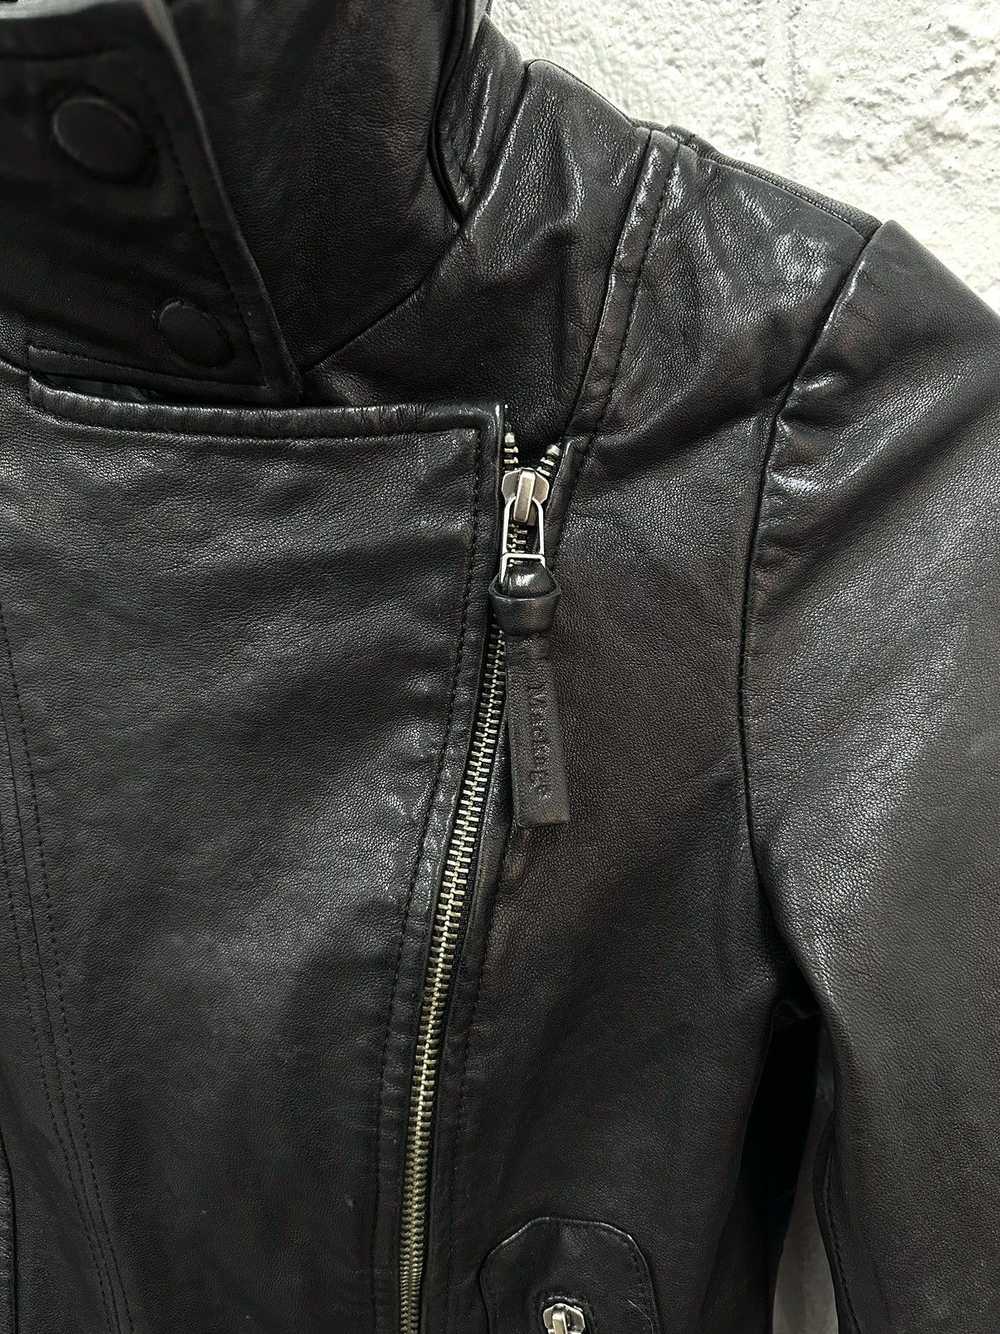 Mackage Mackage Leather Biker jacket - image 4